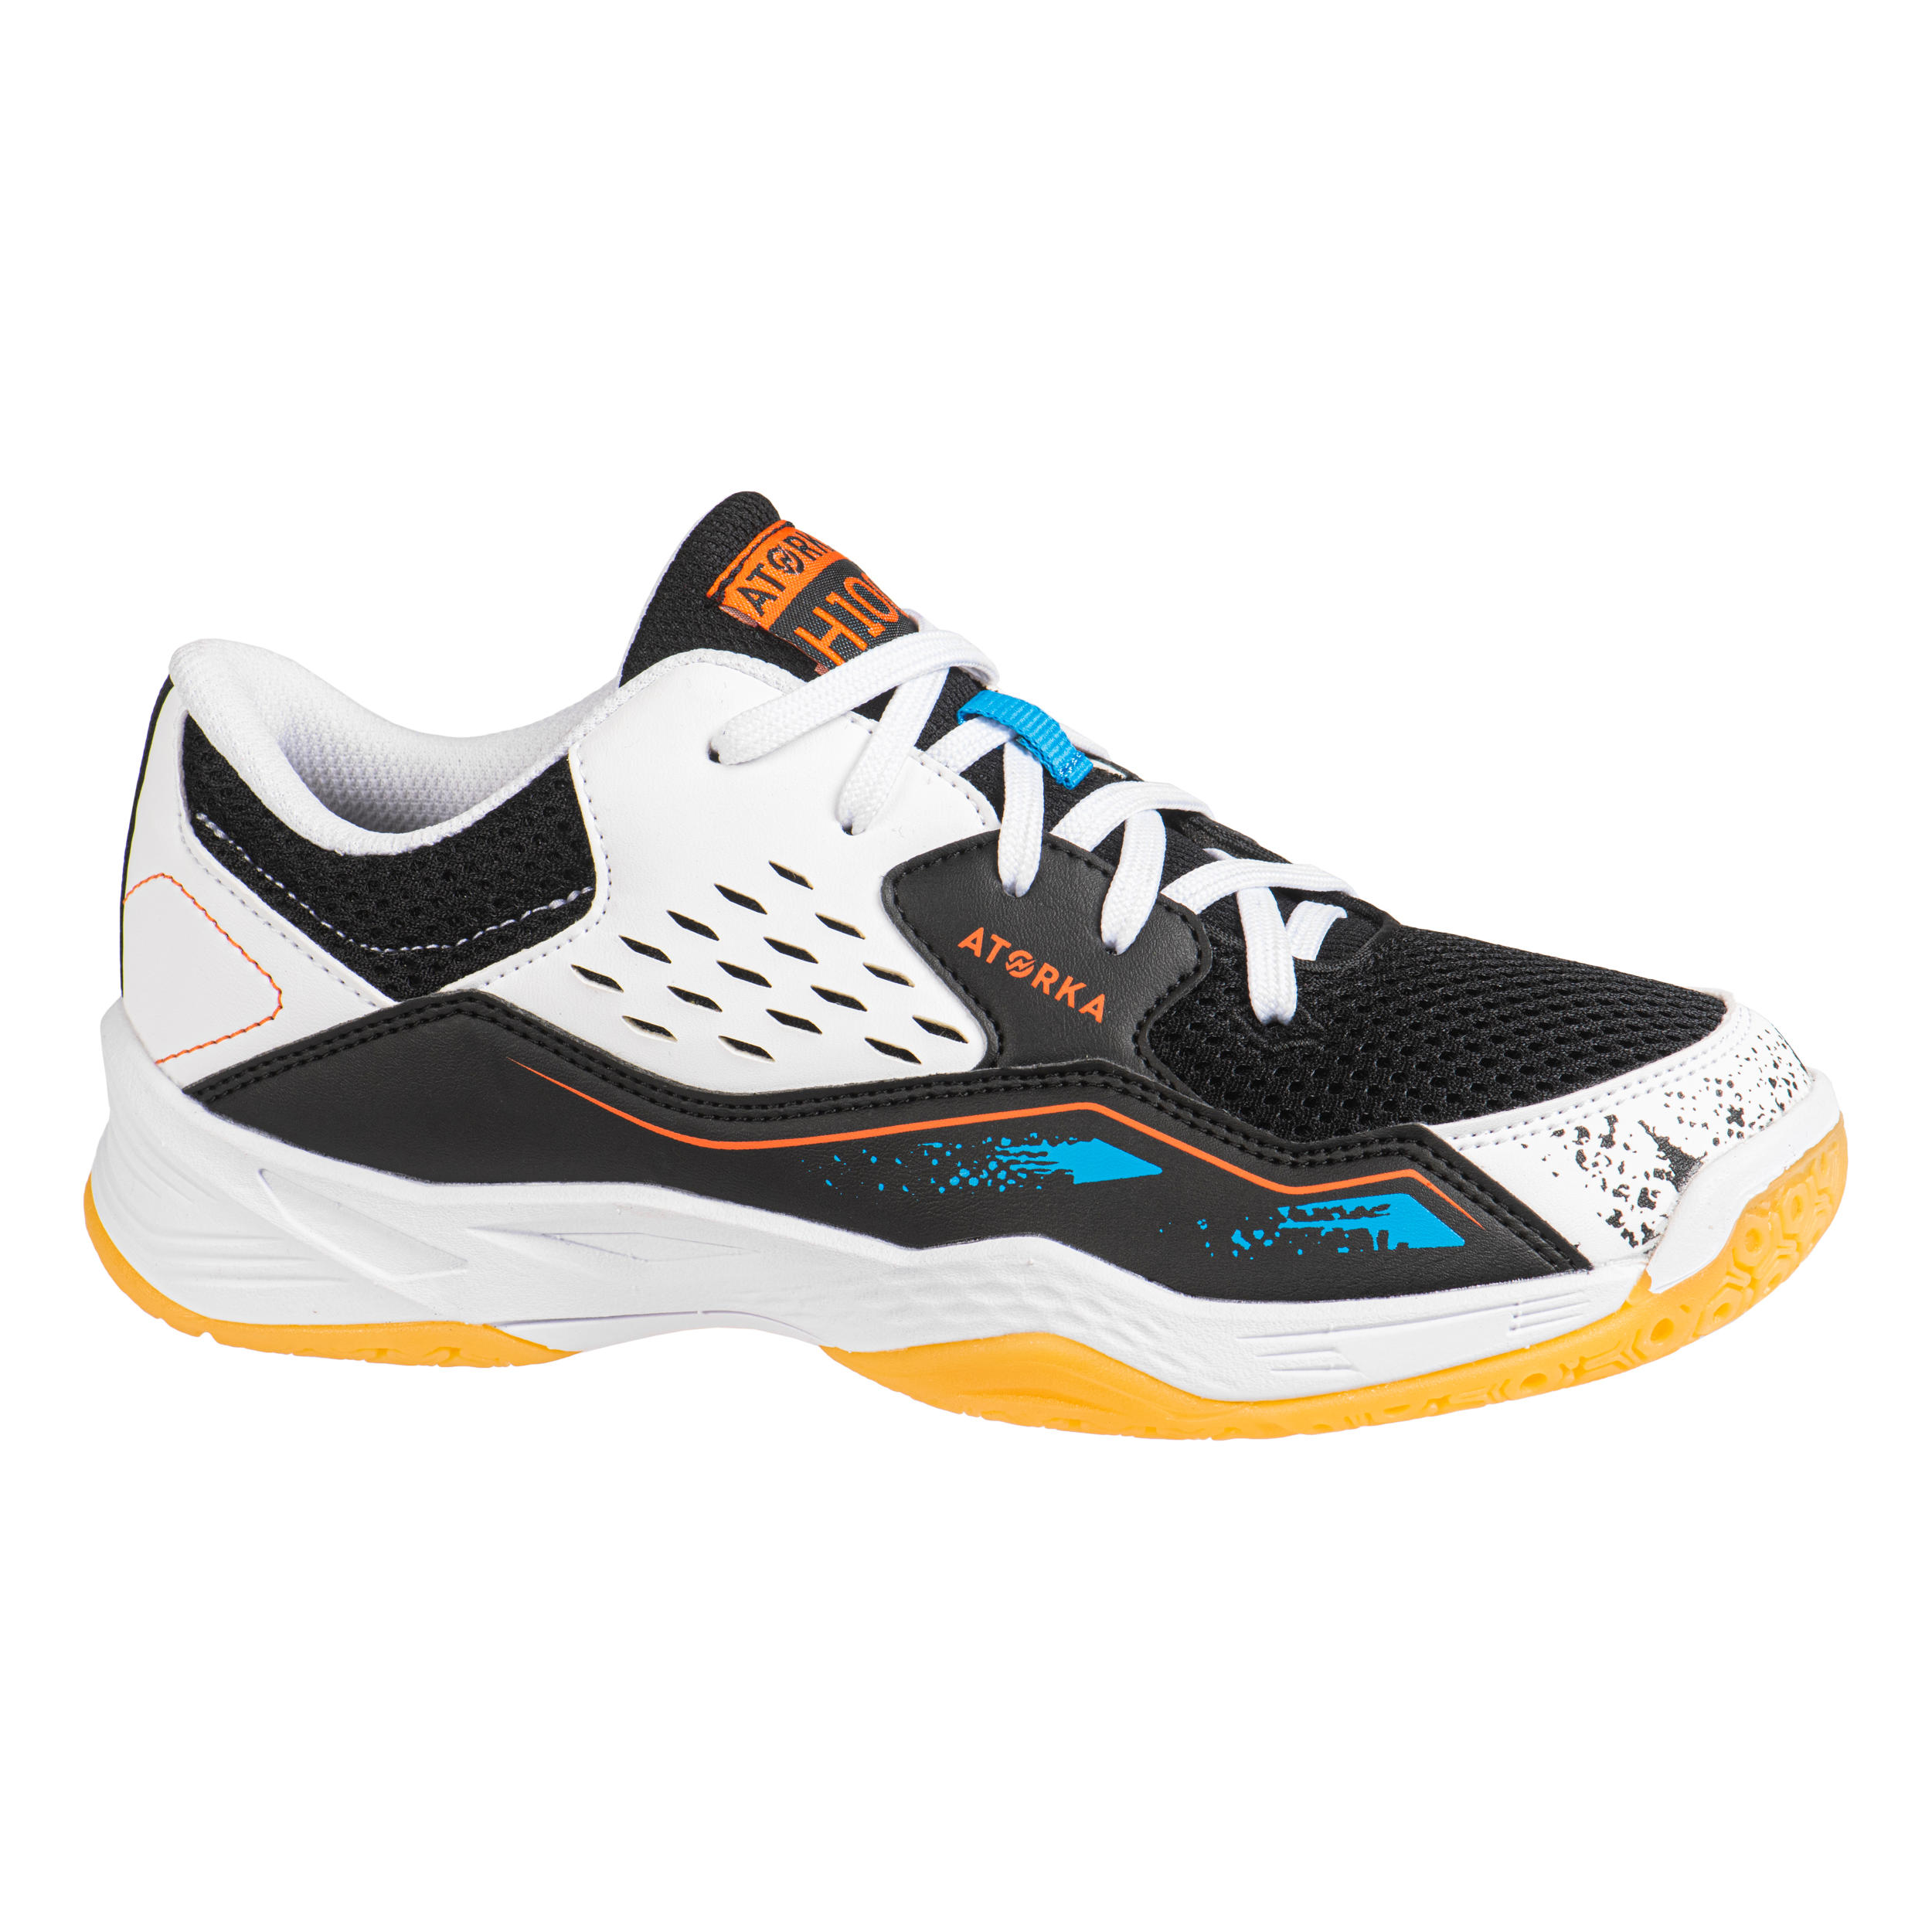 ATORKA Chaussures de handball enfant H100 avec lacets blanc/noir - ATORKA - 35